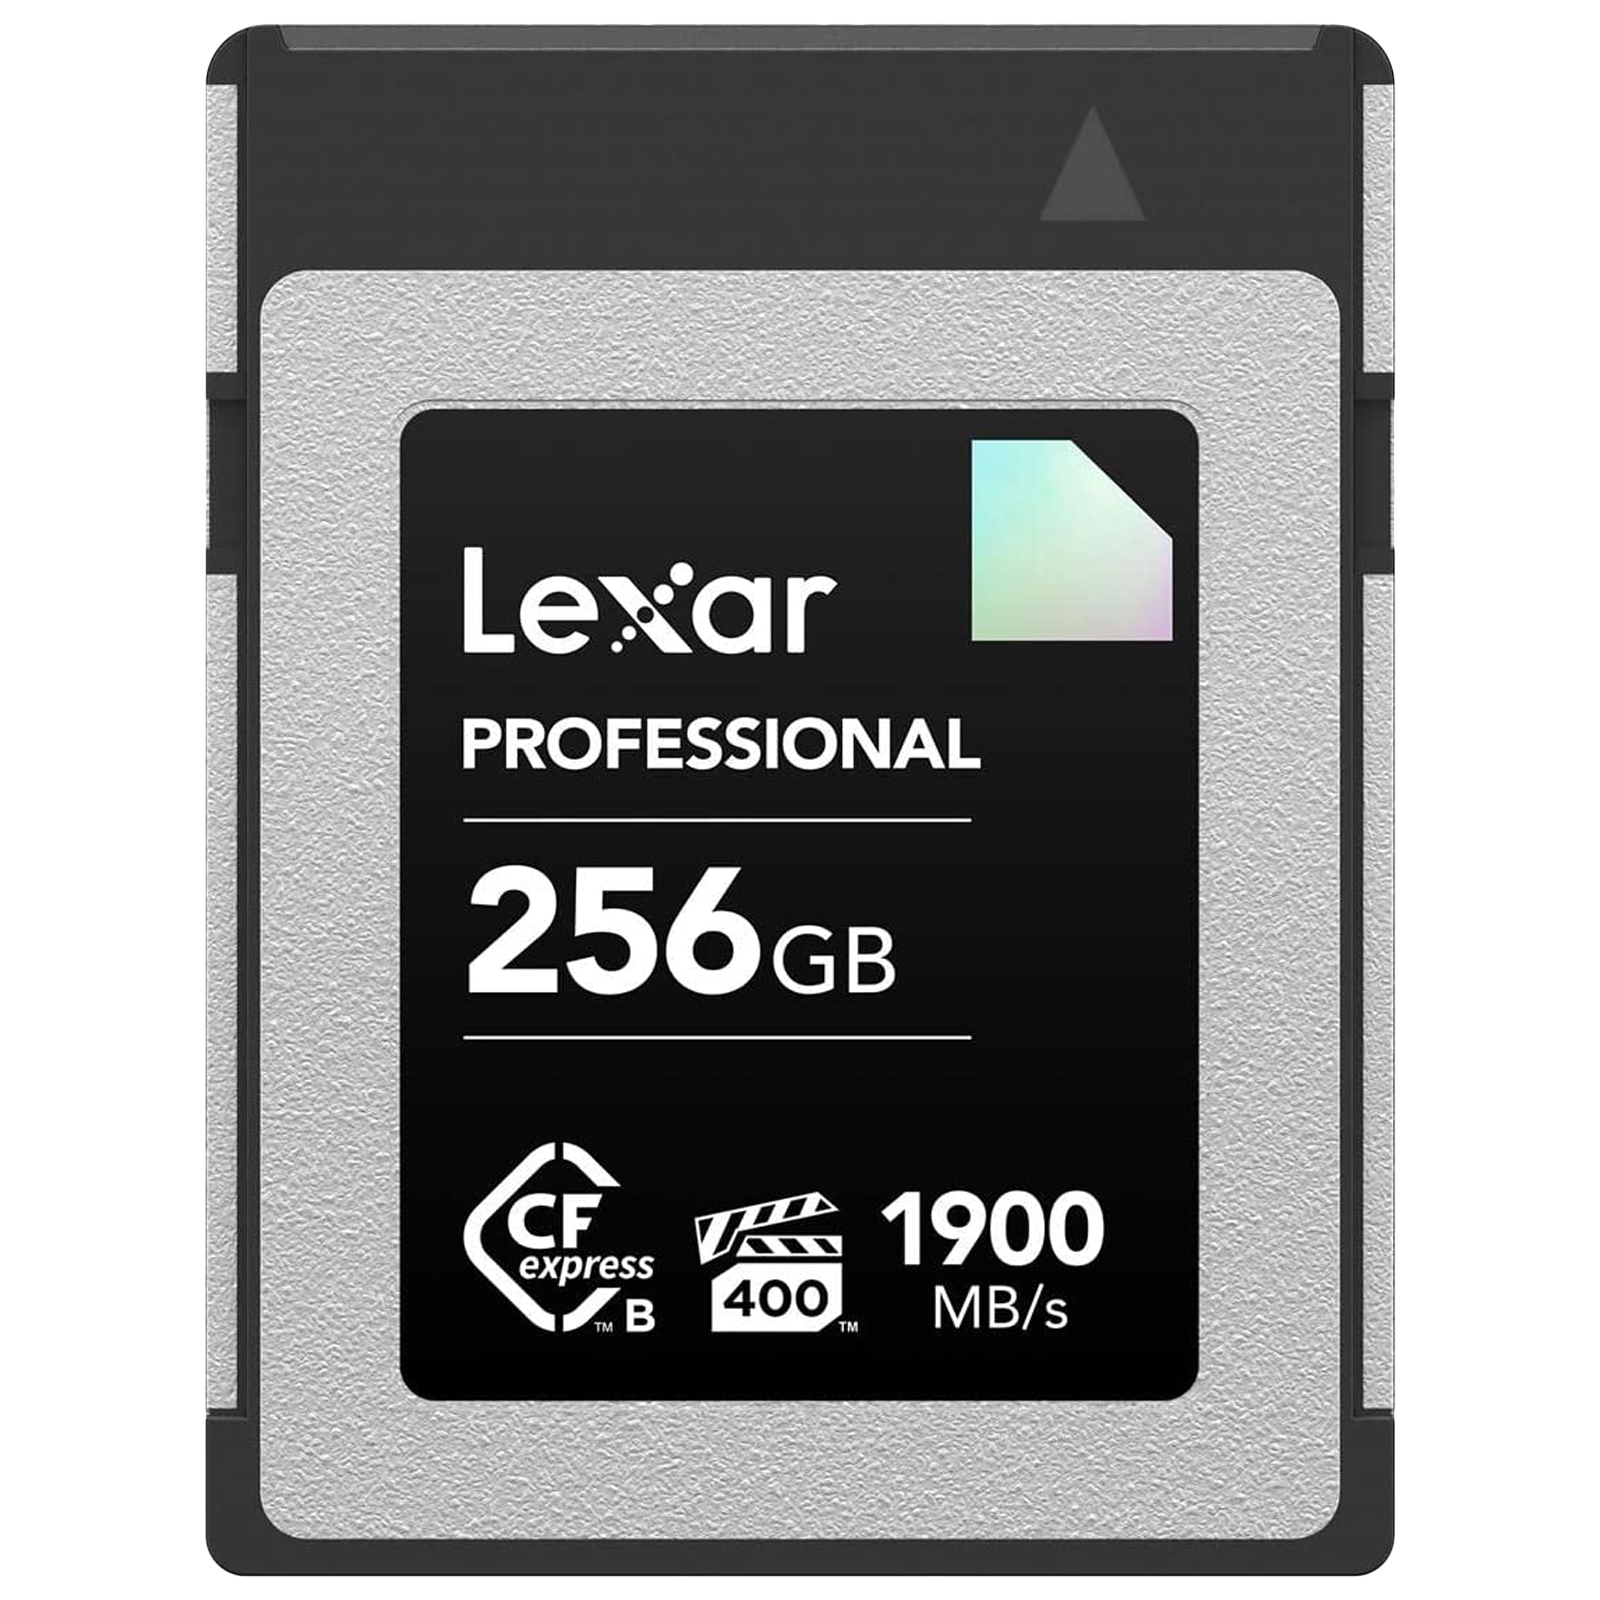 Buy Lexar Diamond Series XQD 256GB 1900MB/s Memory Card Online - Croma